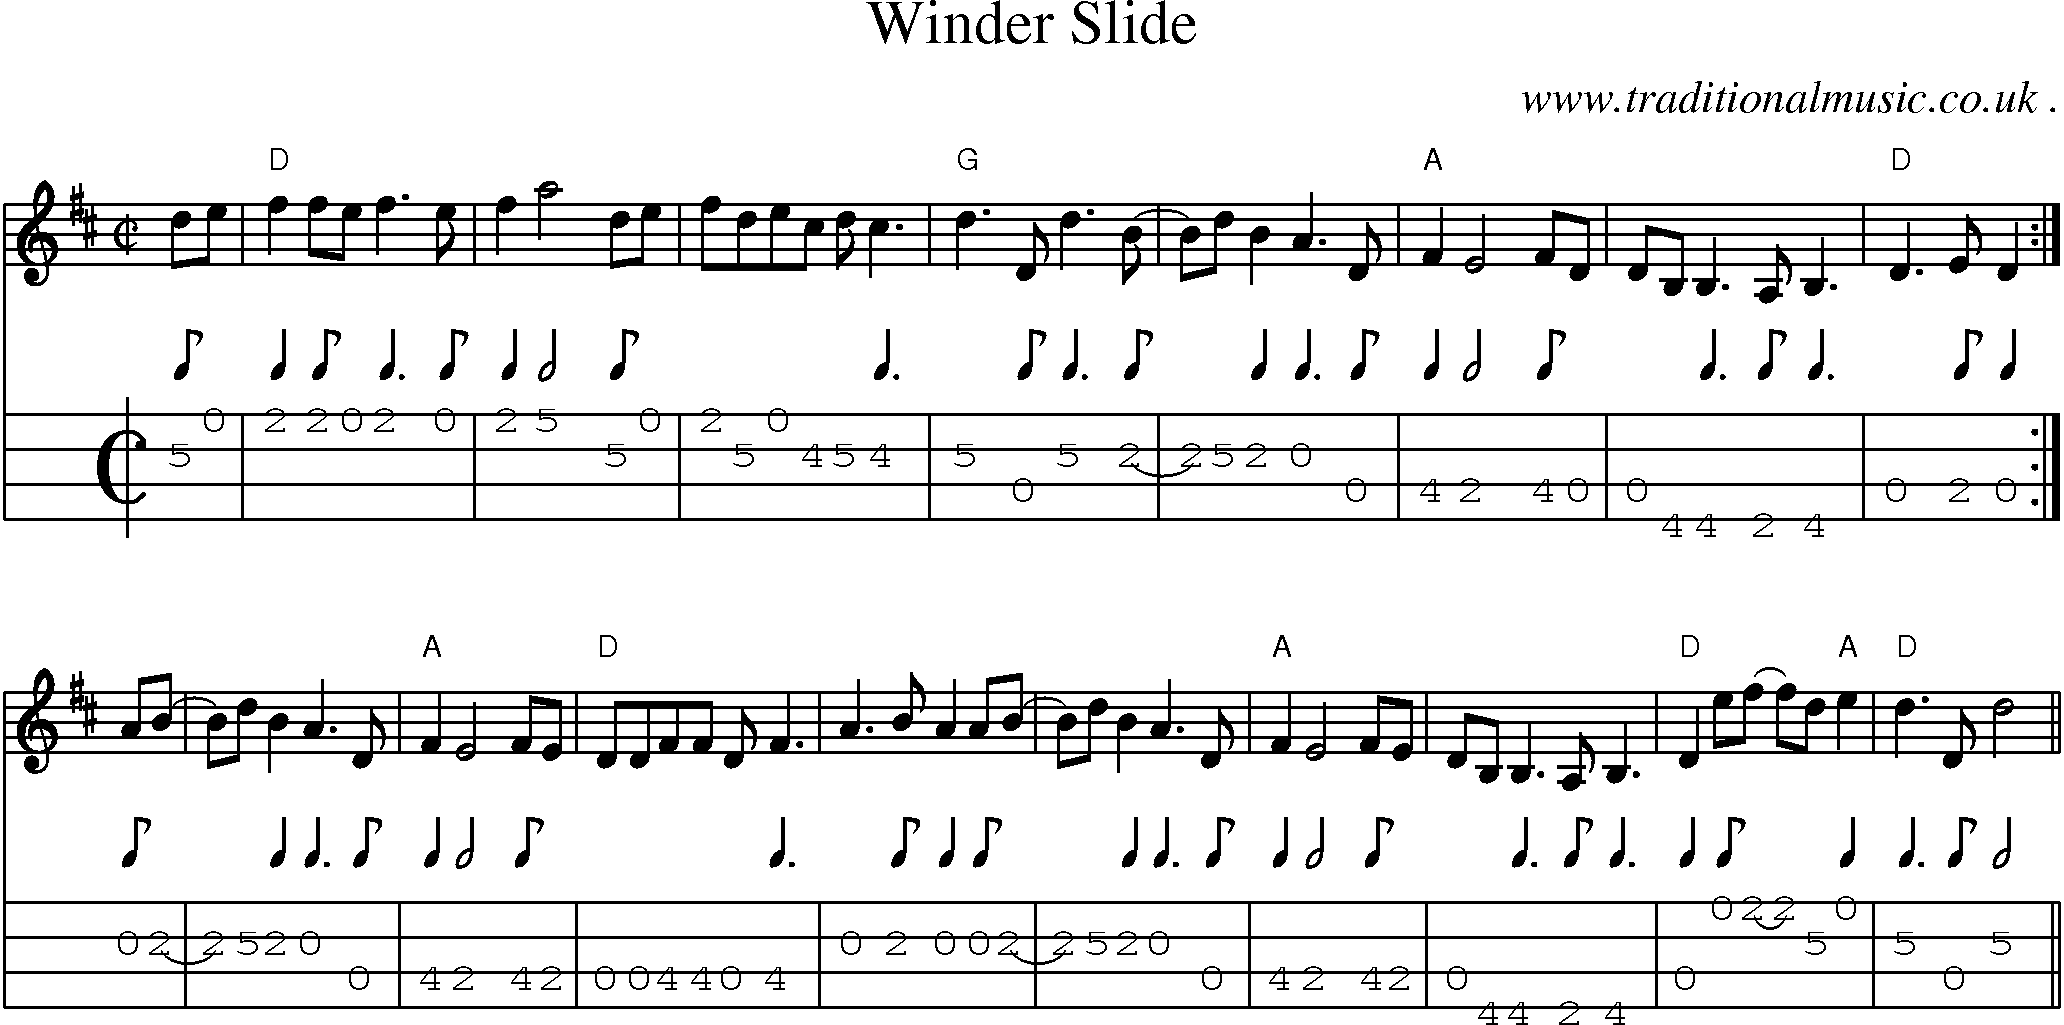 Music Score and Mandolin Tabs for Winder Slide